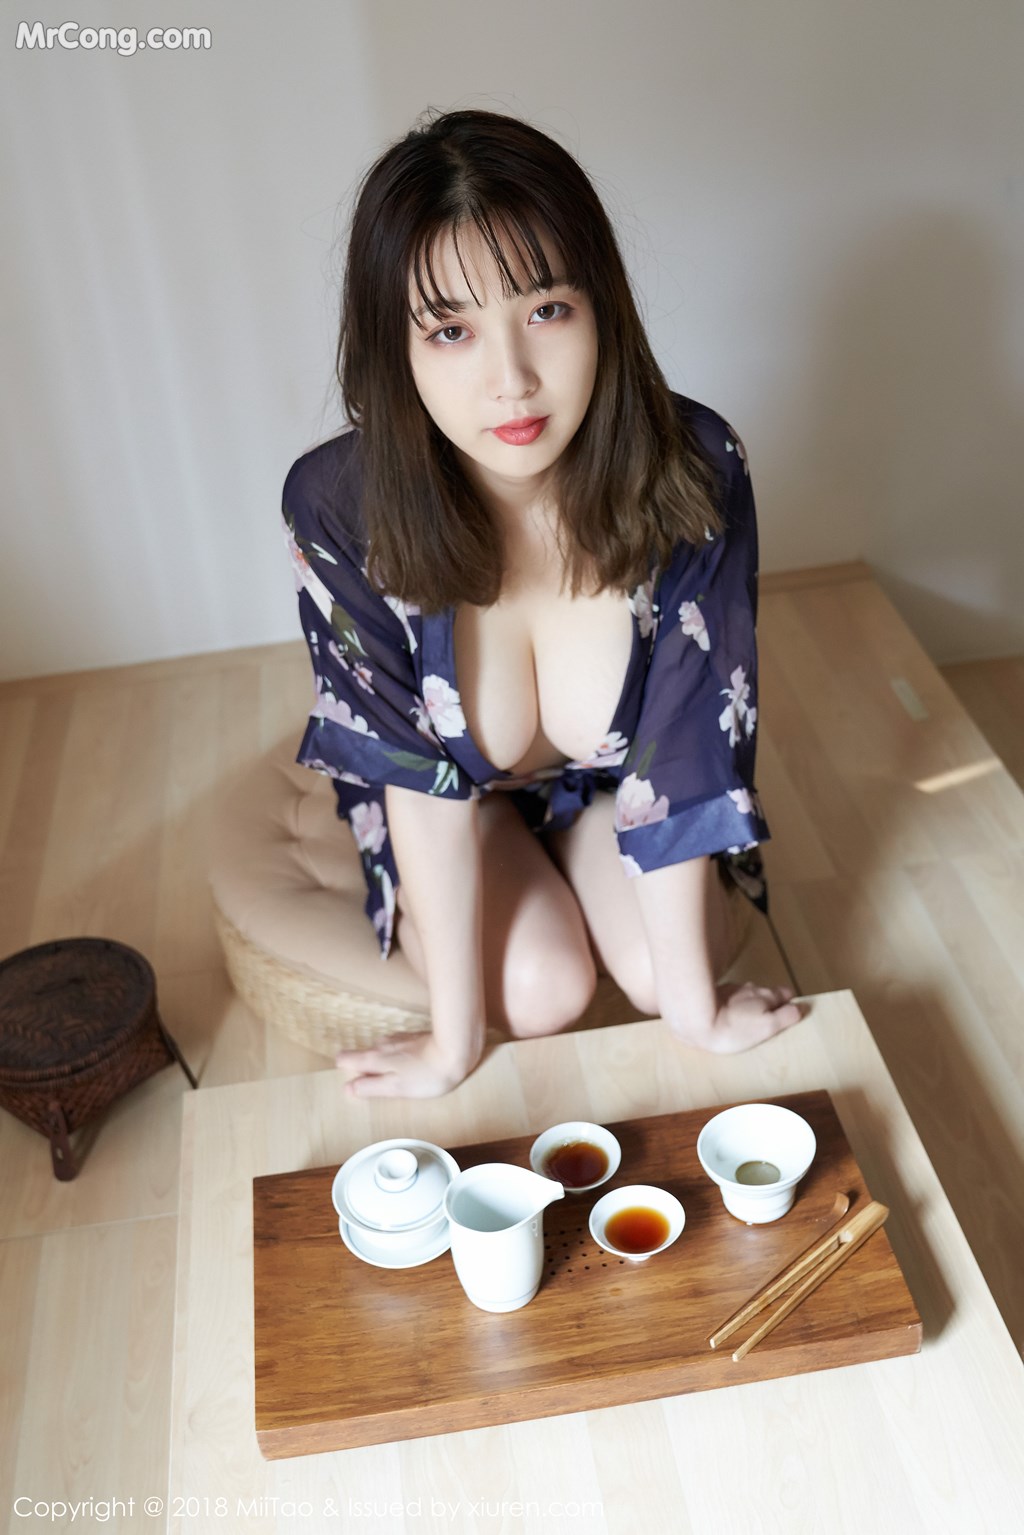 MiiTao Vol.121: Model Mei Xu (美 绪) (93 photos)